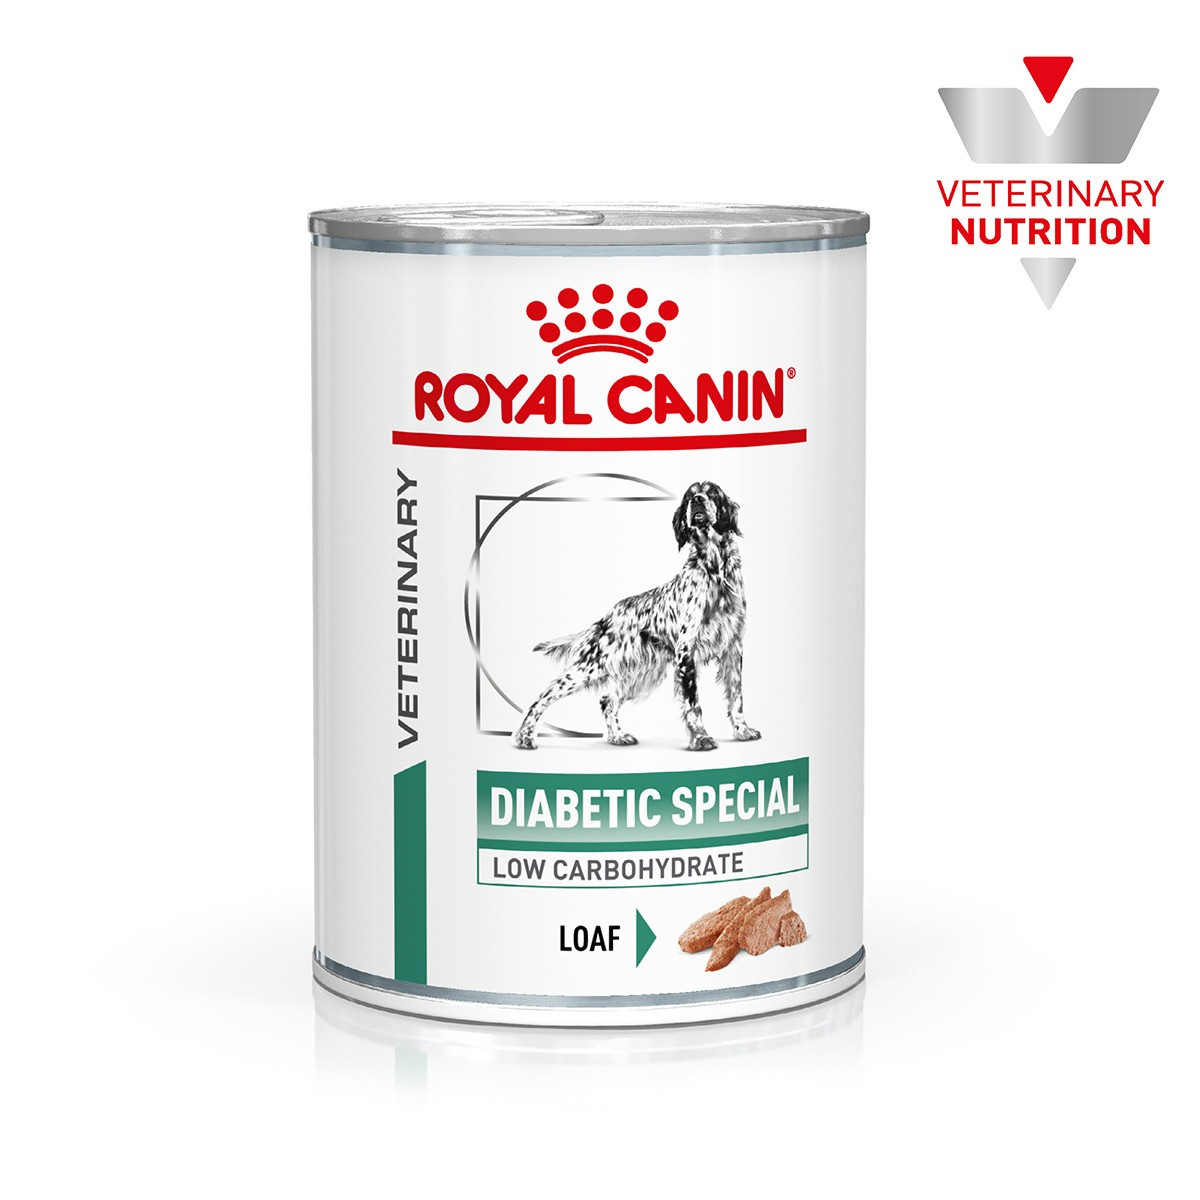 Royal Canin Diabetic Special LC Dog Cans вологий корм для собак контроль рівня глюкози при діабеті 410 гр, фото 1